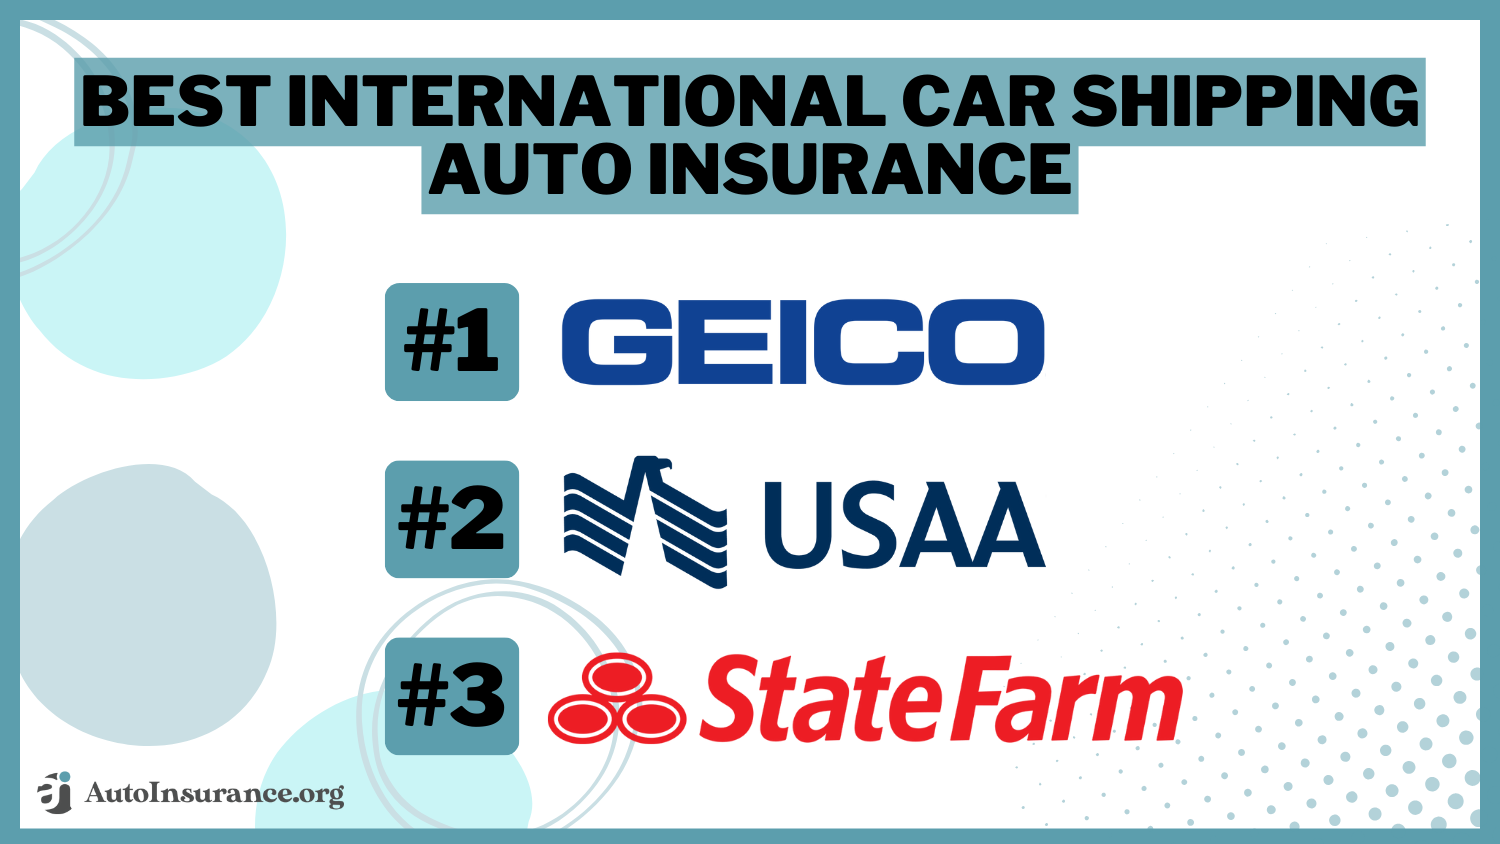 Geico USAA state farm Best international car shipping auto insurance